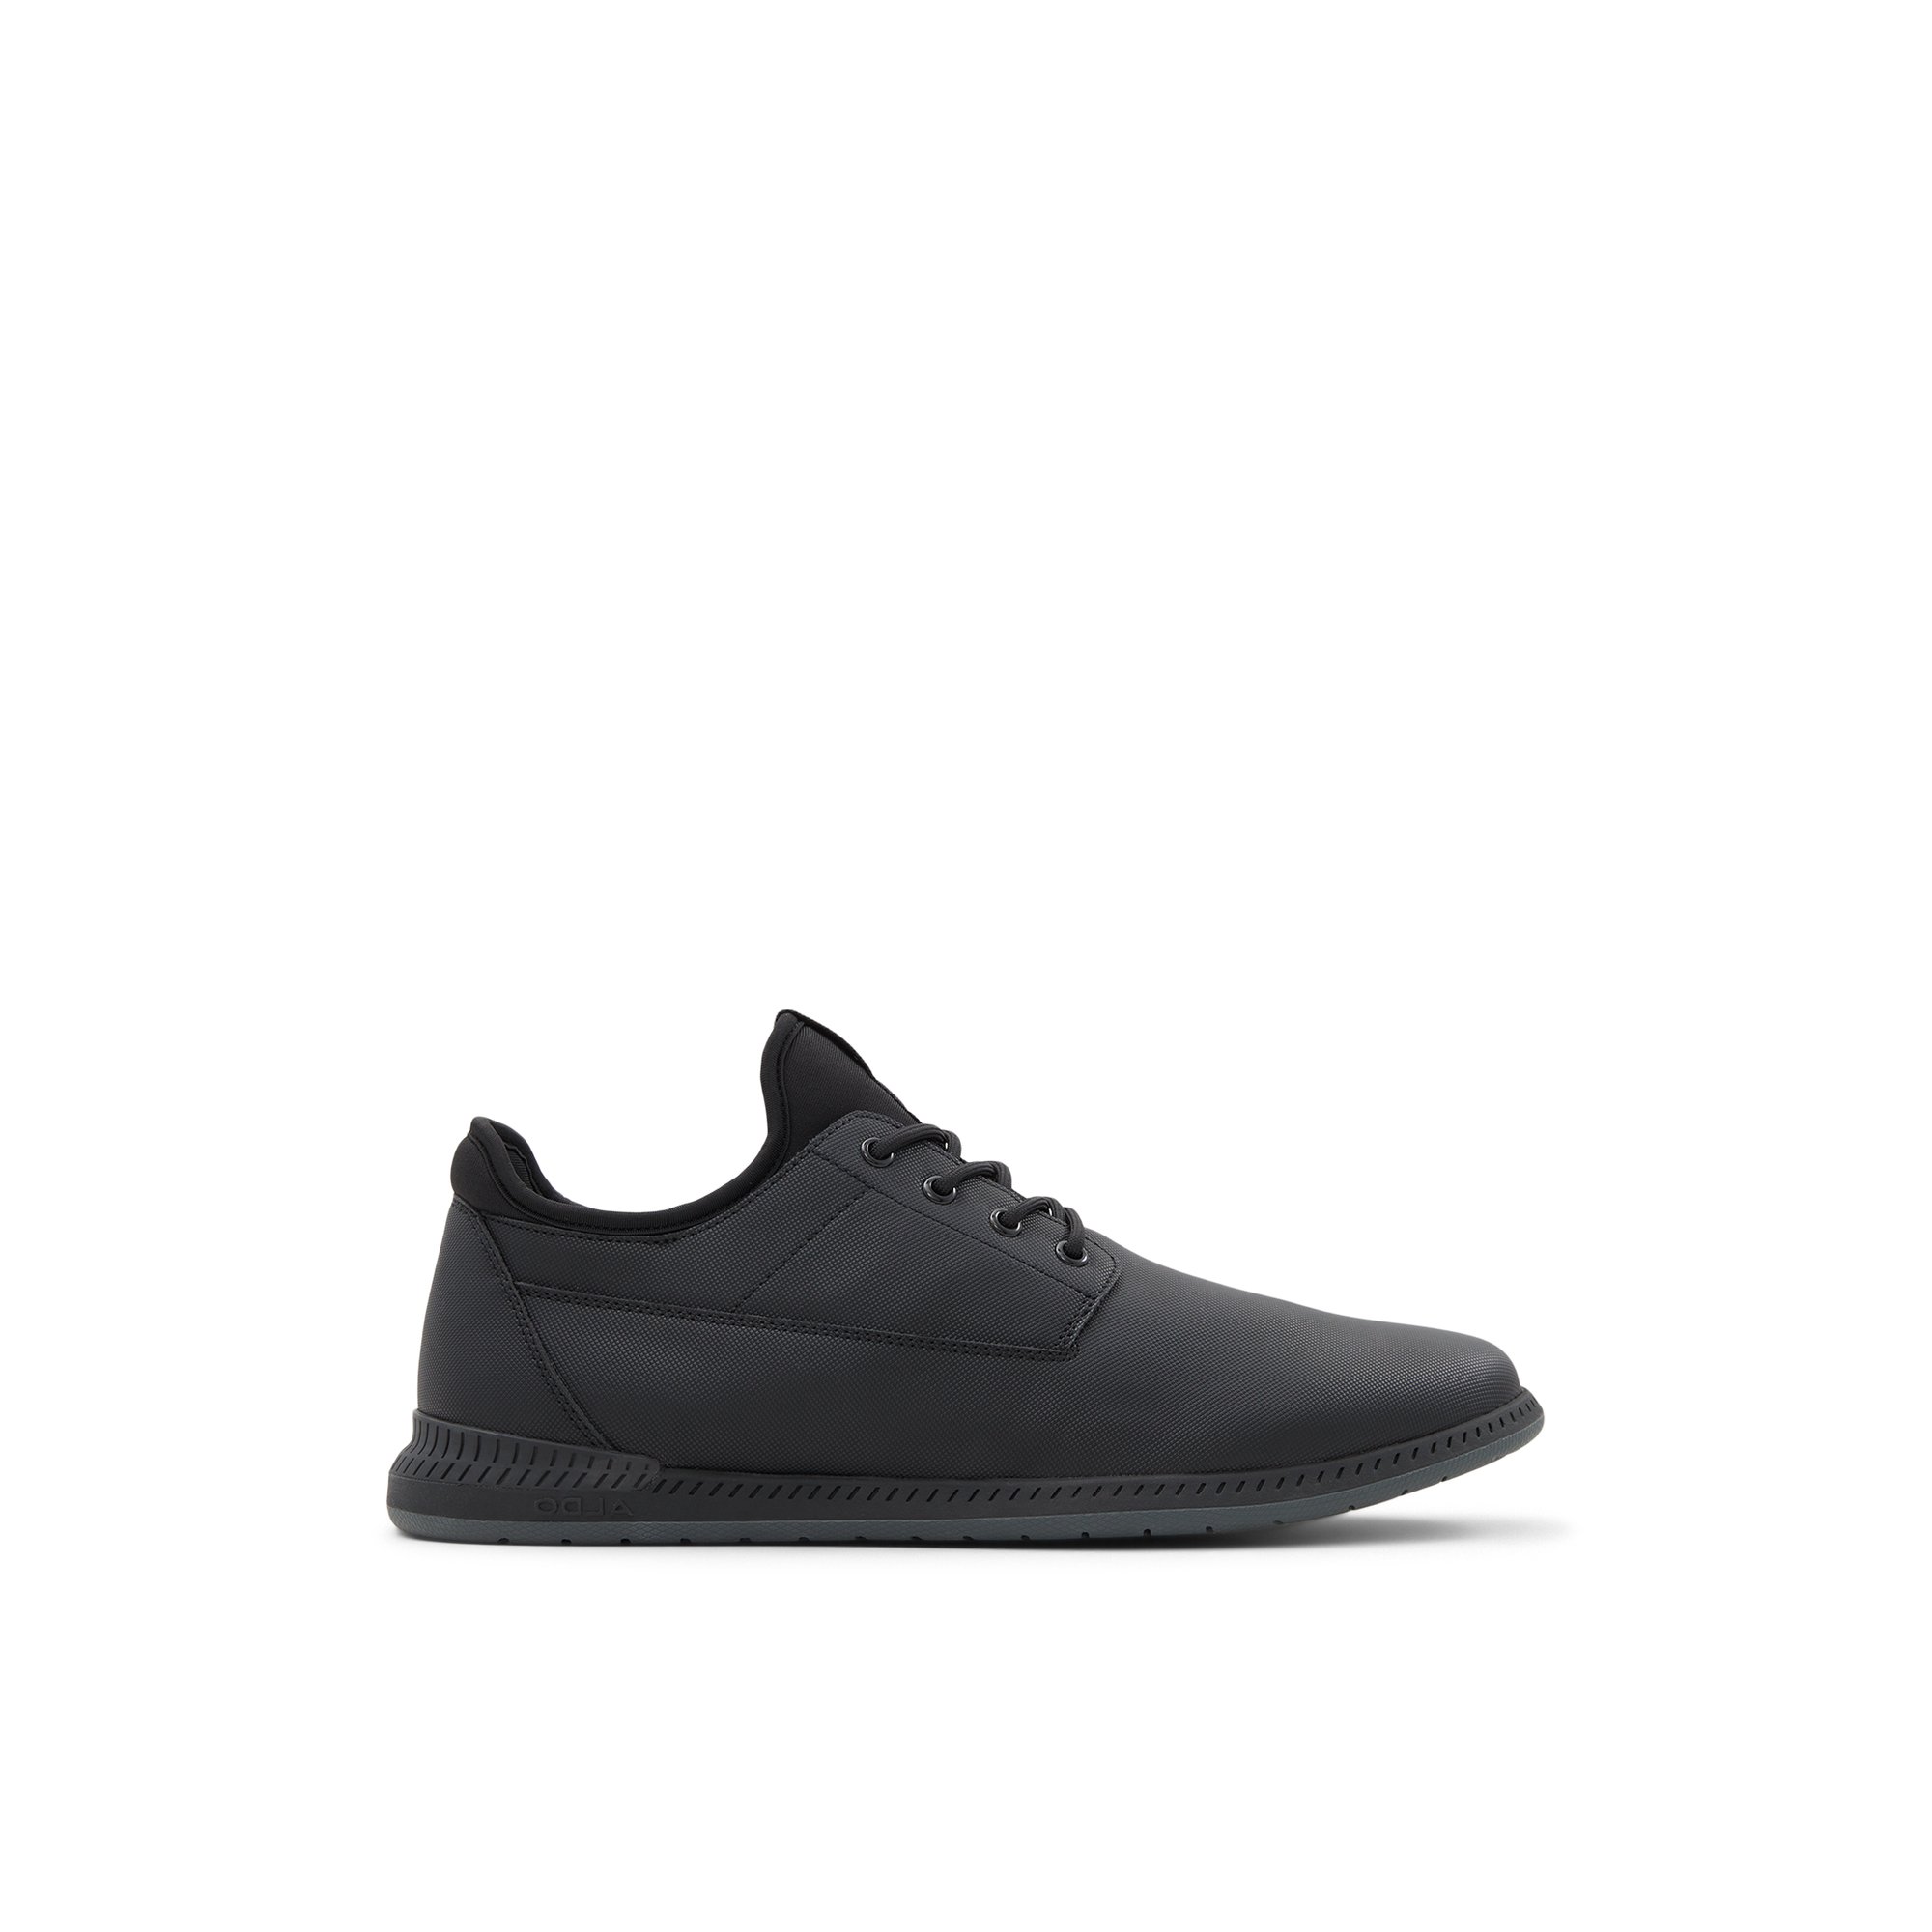 ALDO Blufferss-wr - Men's Casual Shoes - Black